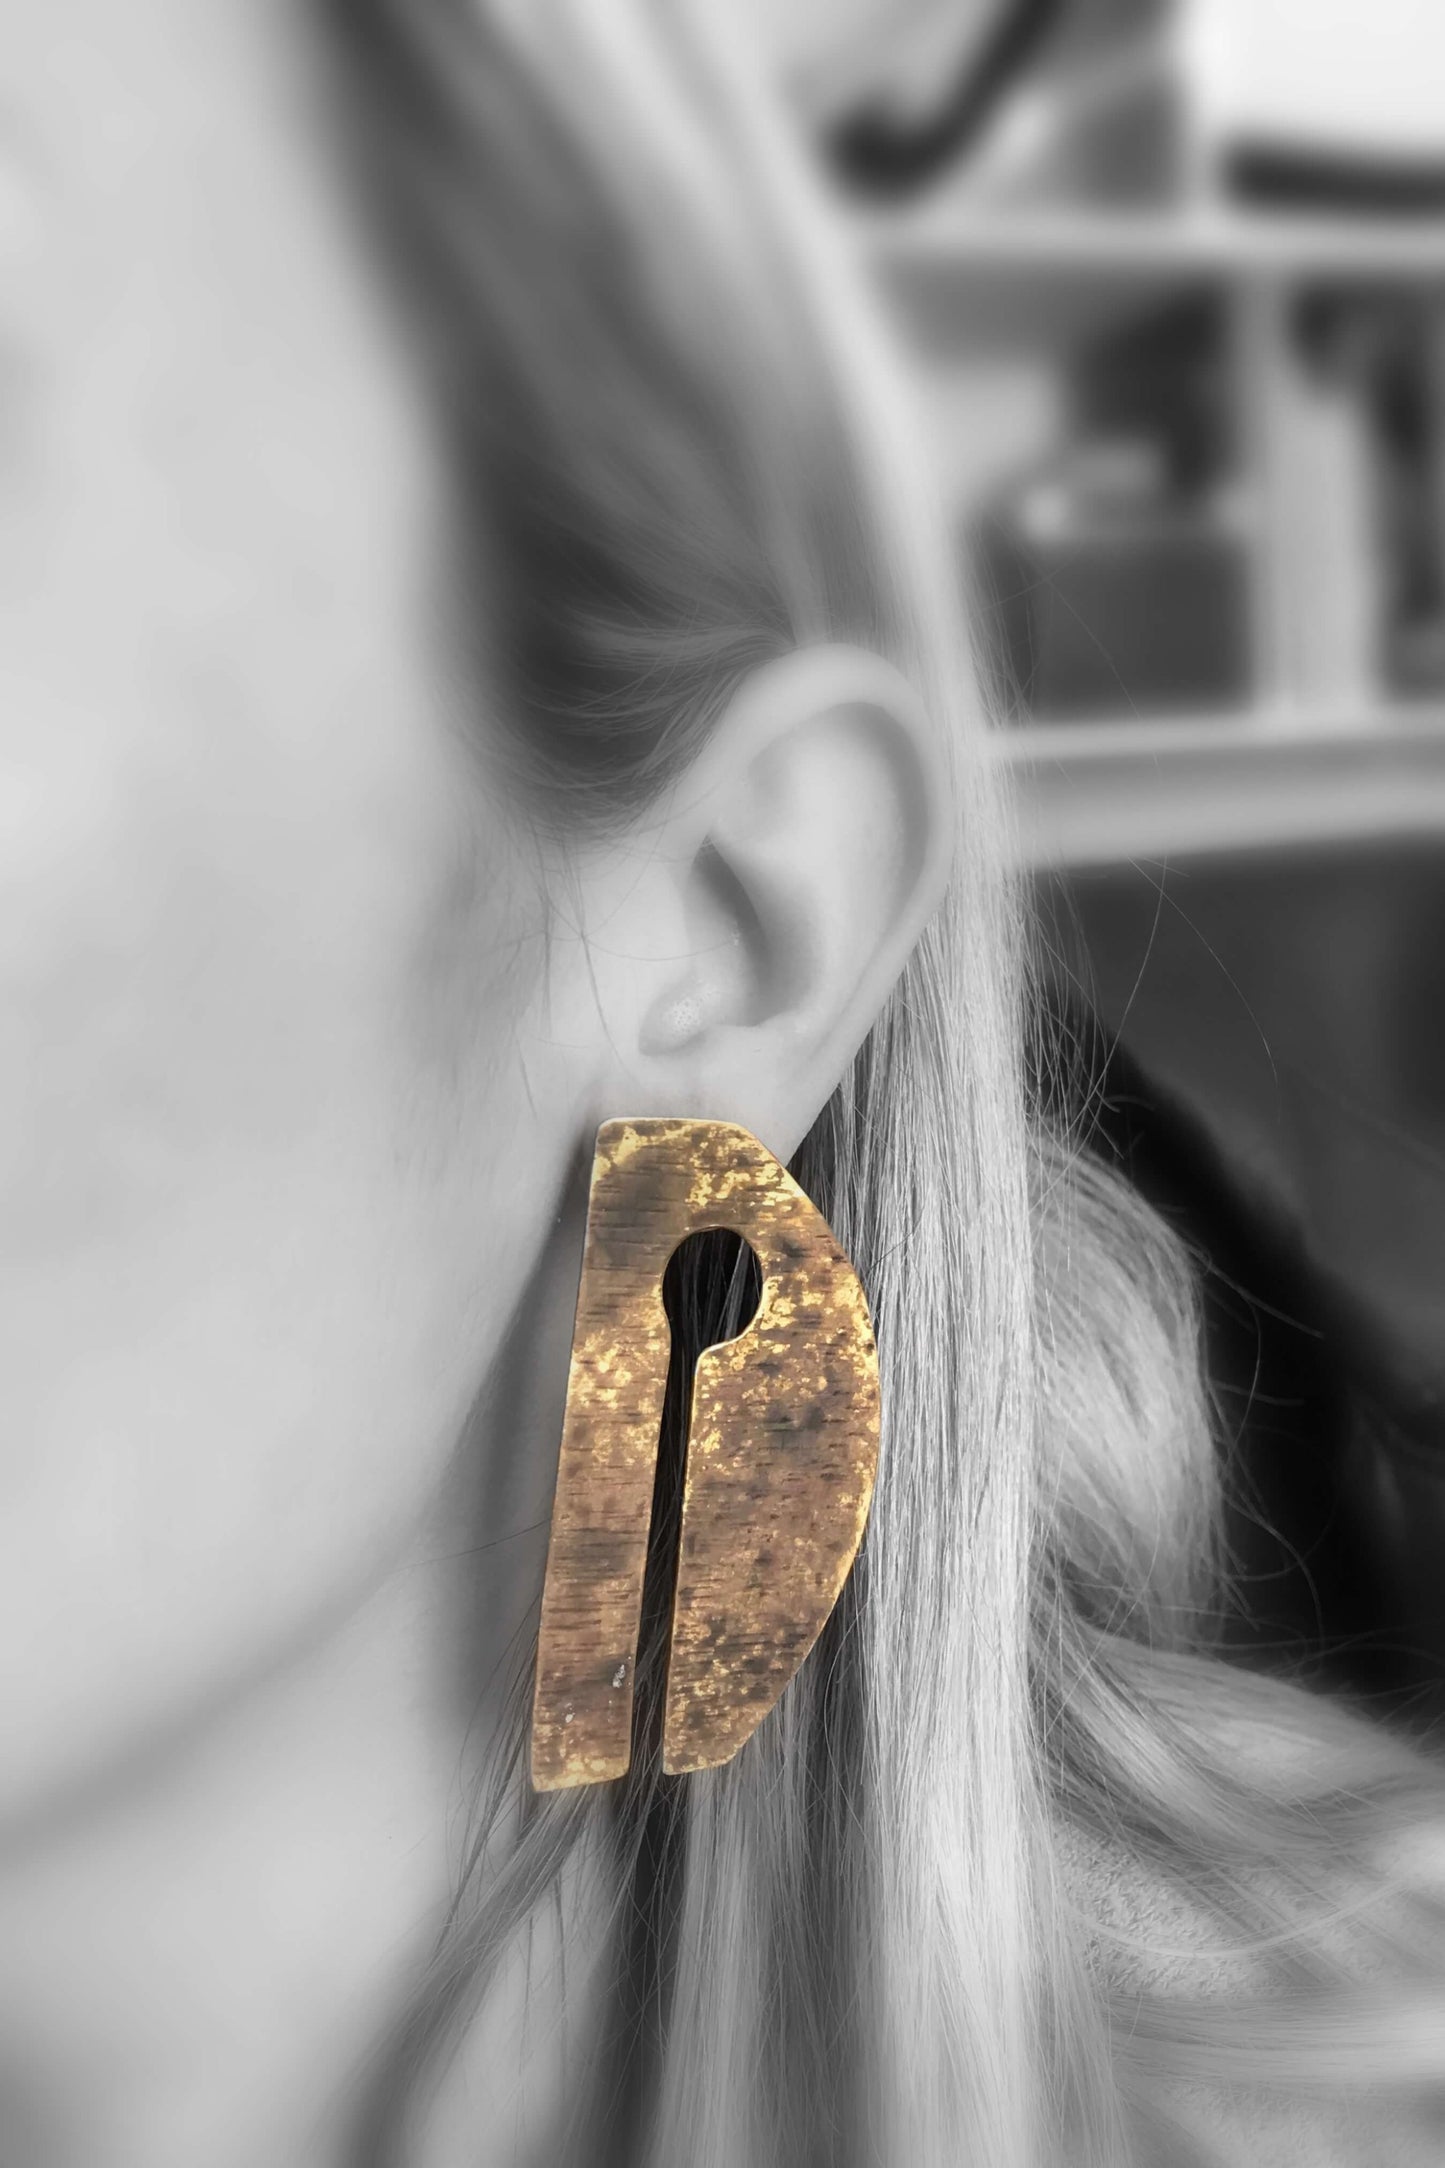 Oxidised brass earrings | Yellow  - Black Past + Future Earrings - CURIUDO